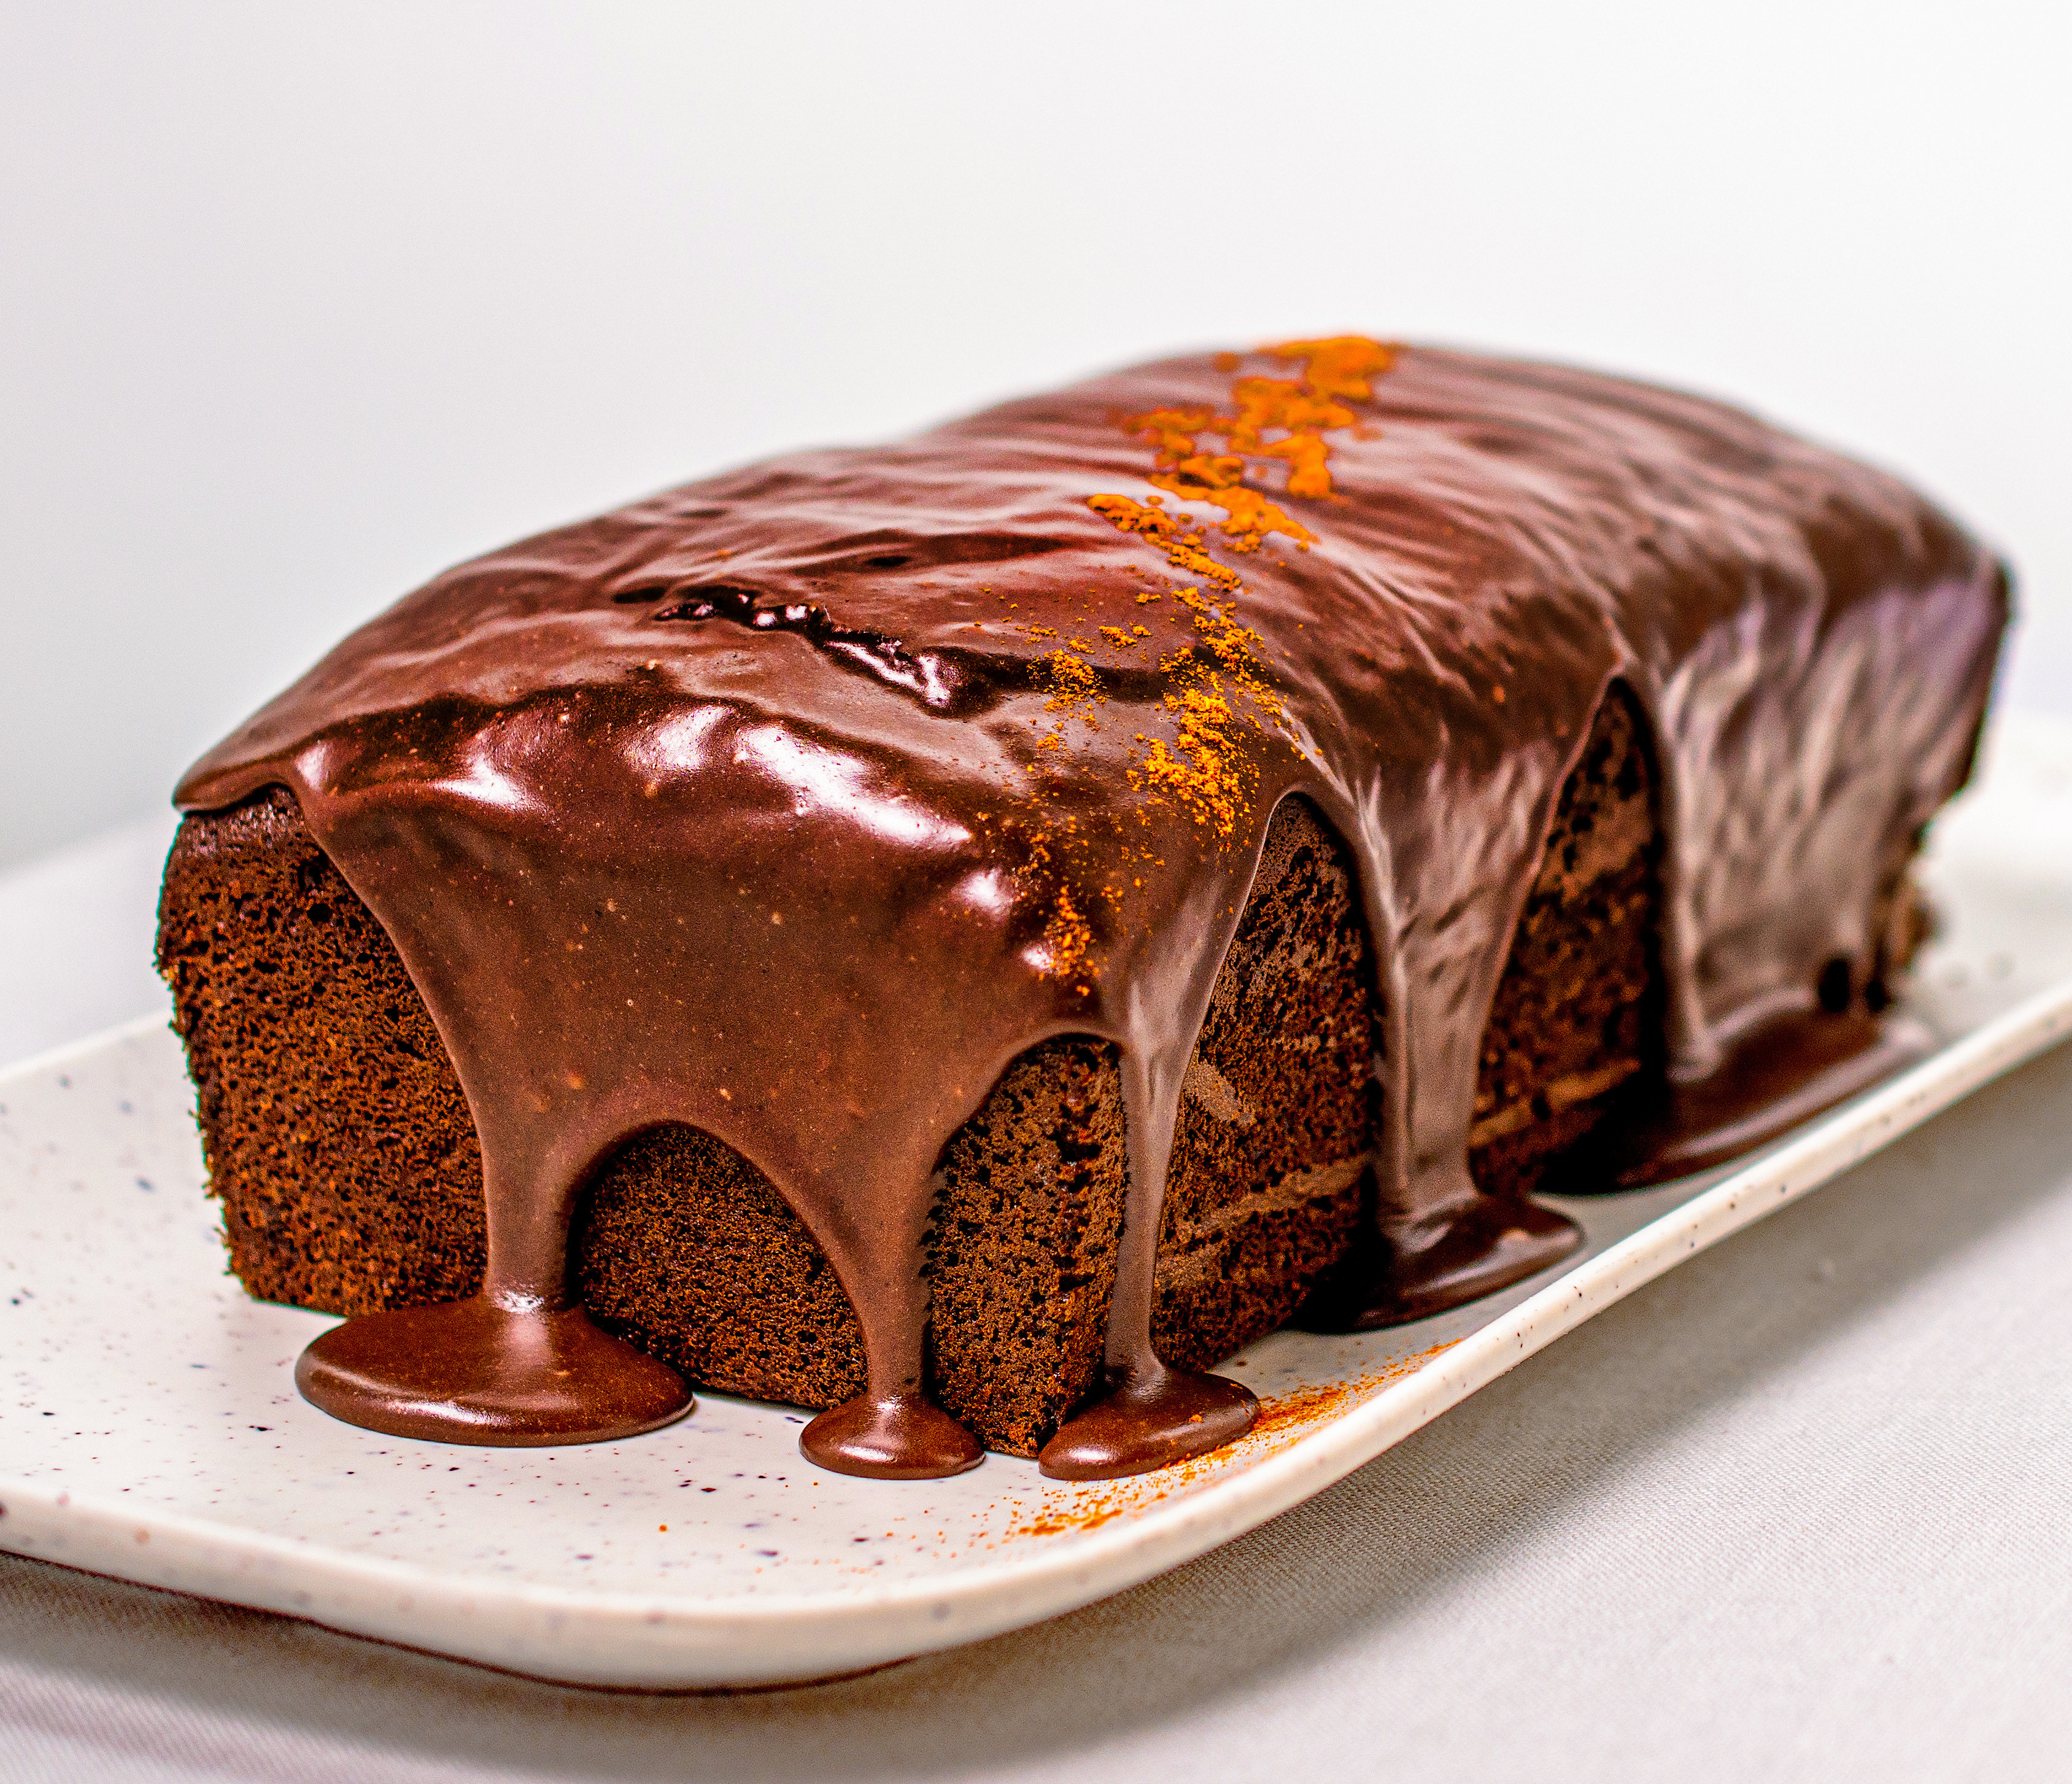 Spherical Chocolate & Orange Cake Recipe by lilypal - Cookpad